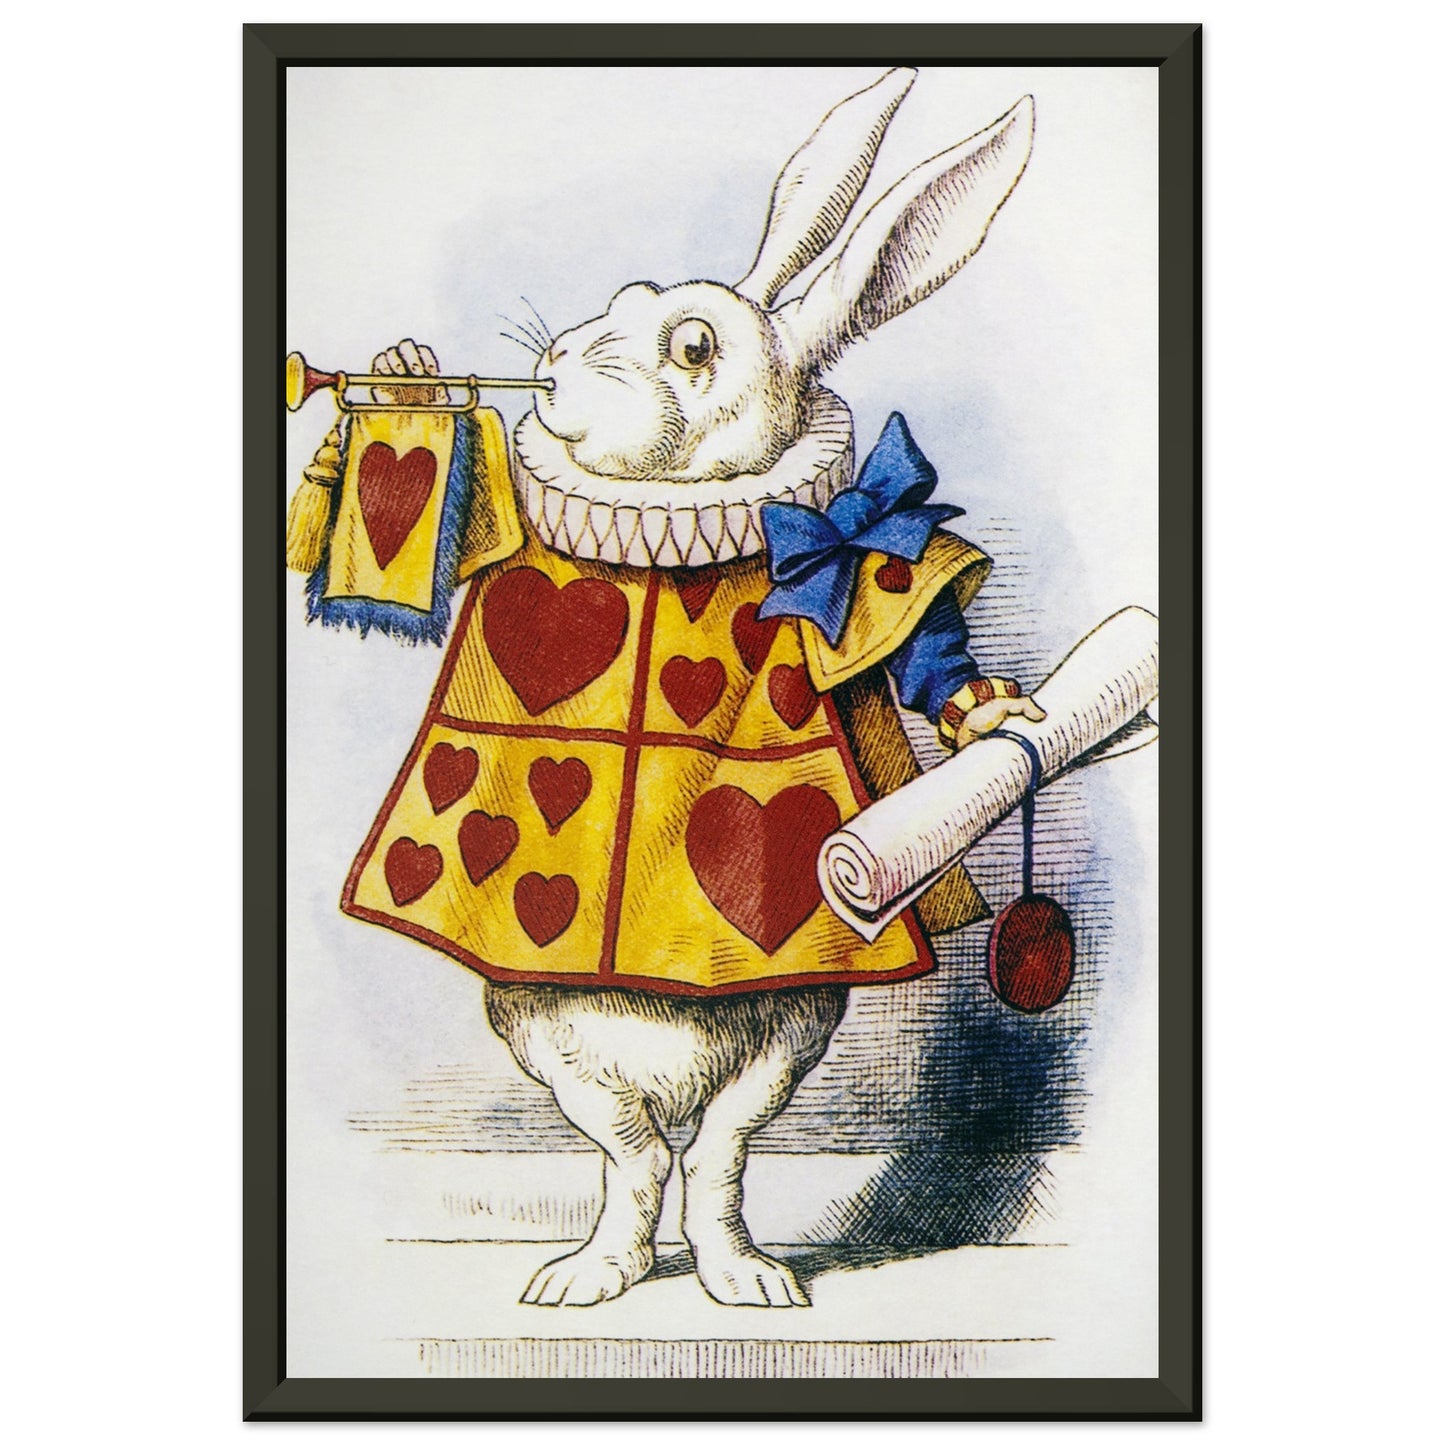 The White Rabbit - Alice In Wonderland